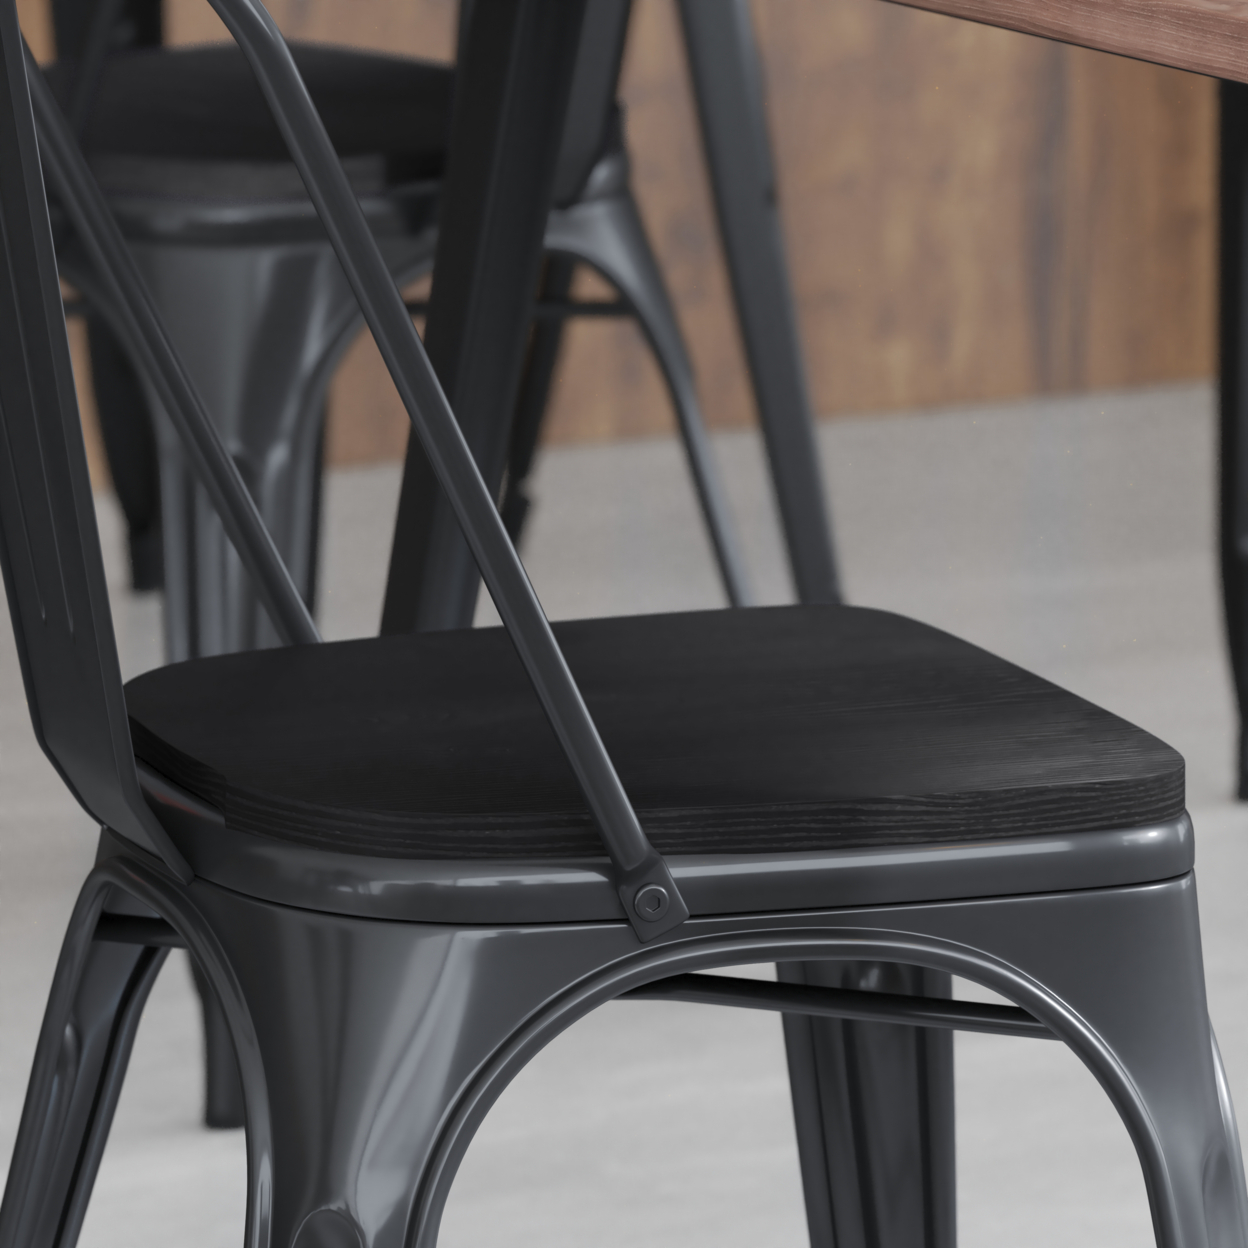 4 Piece Polyresin Chair Seats, Black